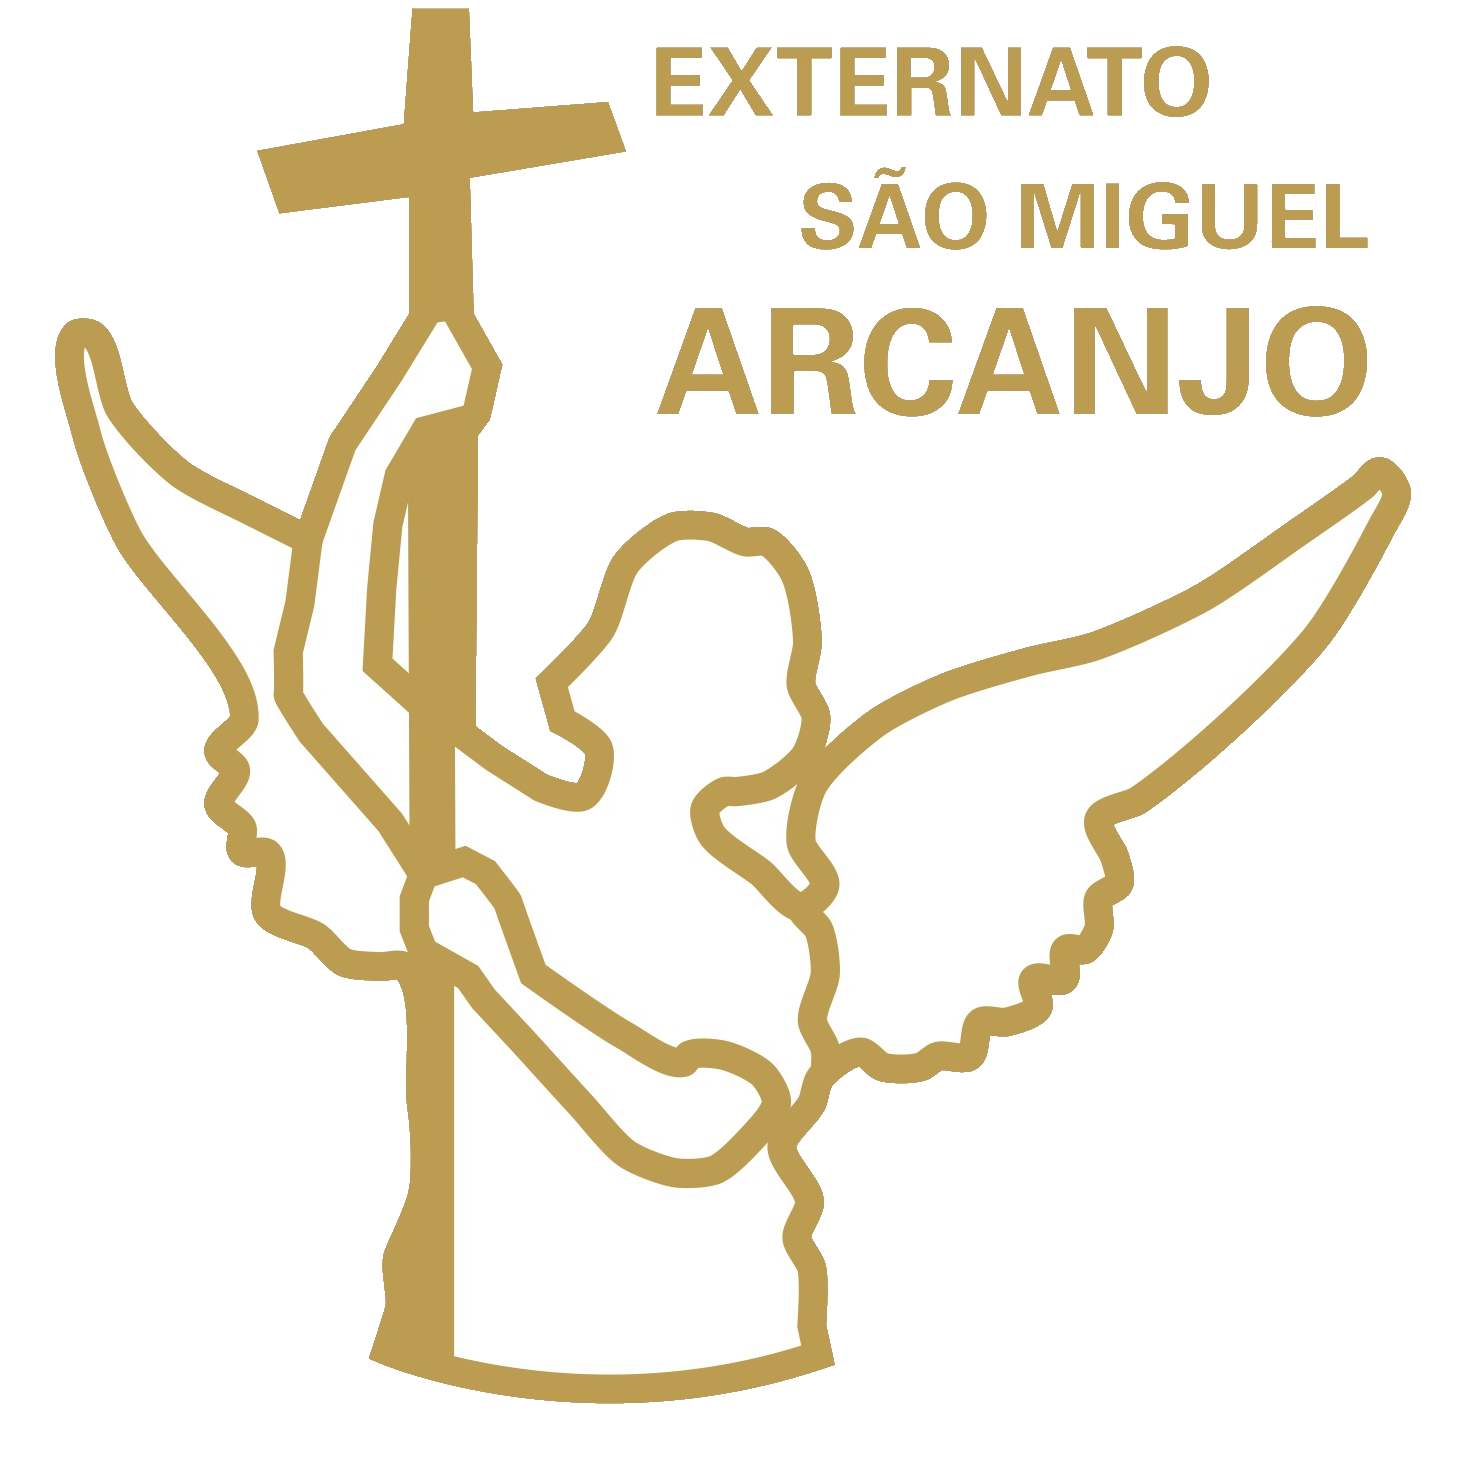 Externato São Miguel Arcanjo